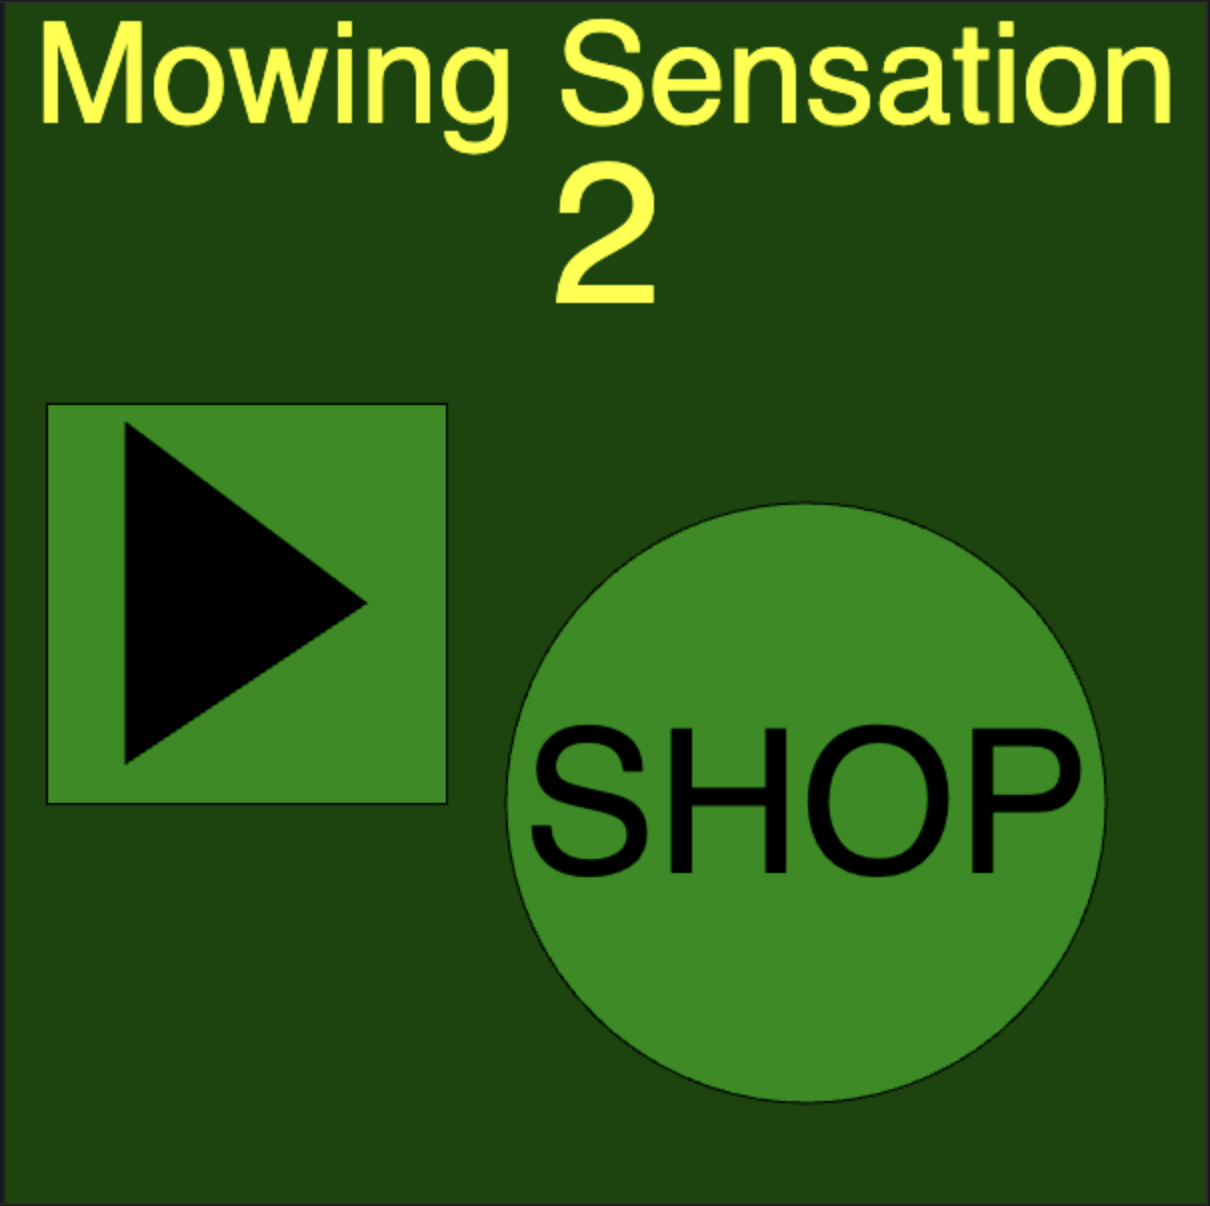 mowing sensation 2 homepage